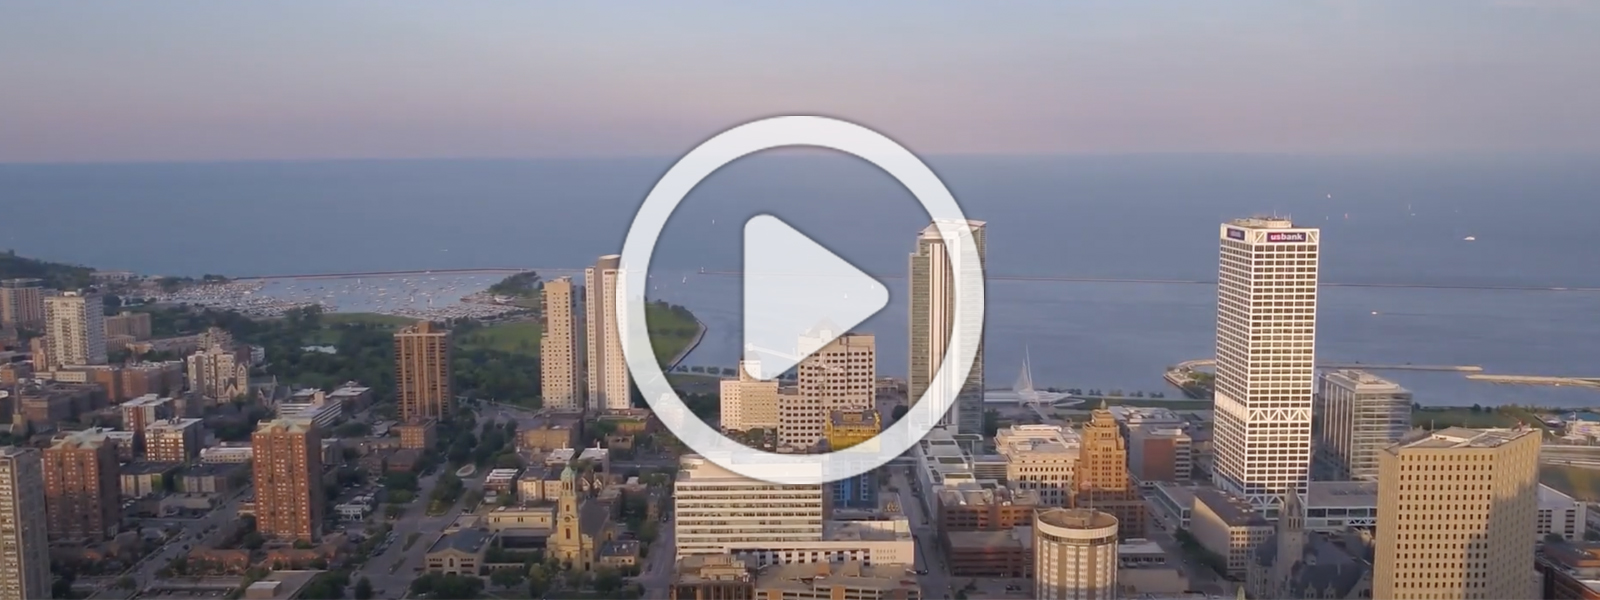 Skyline of Milwaukee with play button overlay